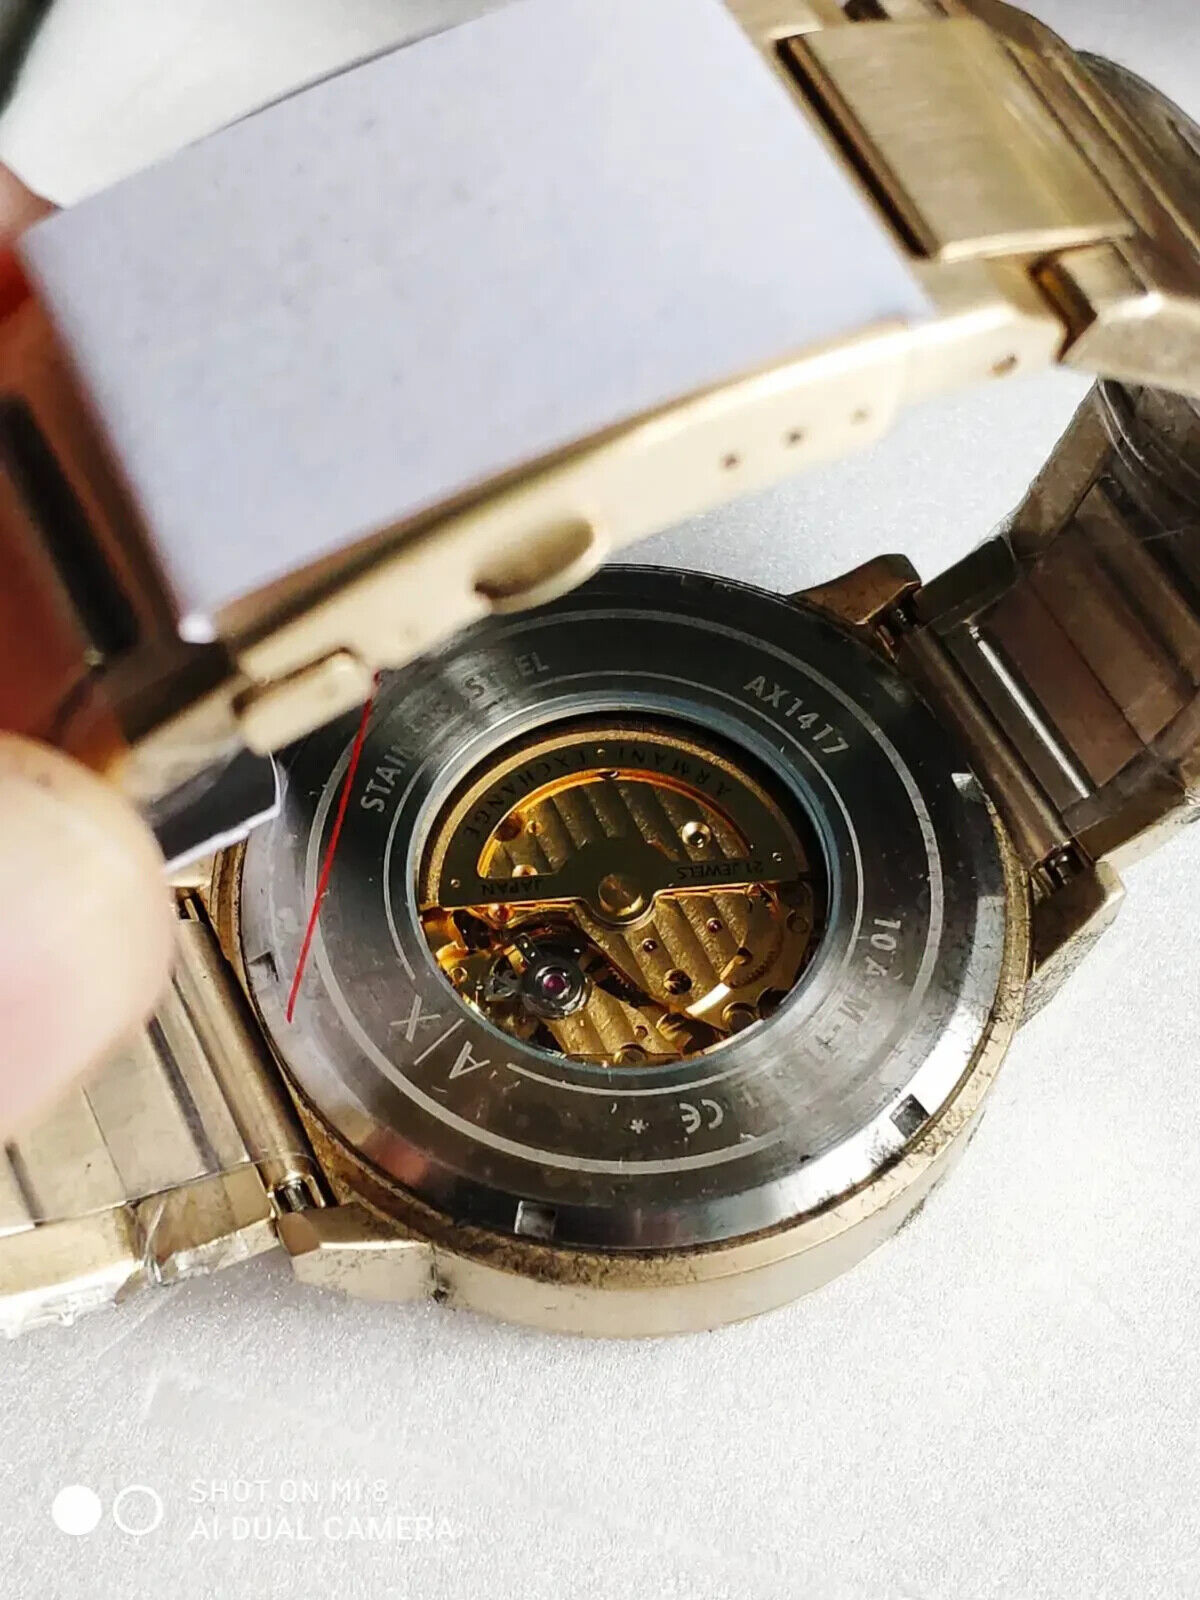 Brand New ARMANI EXCHANGE AX1417 Automatic Gold Skeleton Dial Men's Watch |  eBay